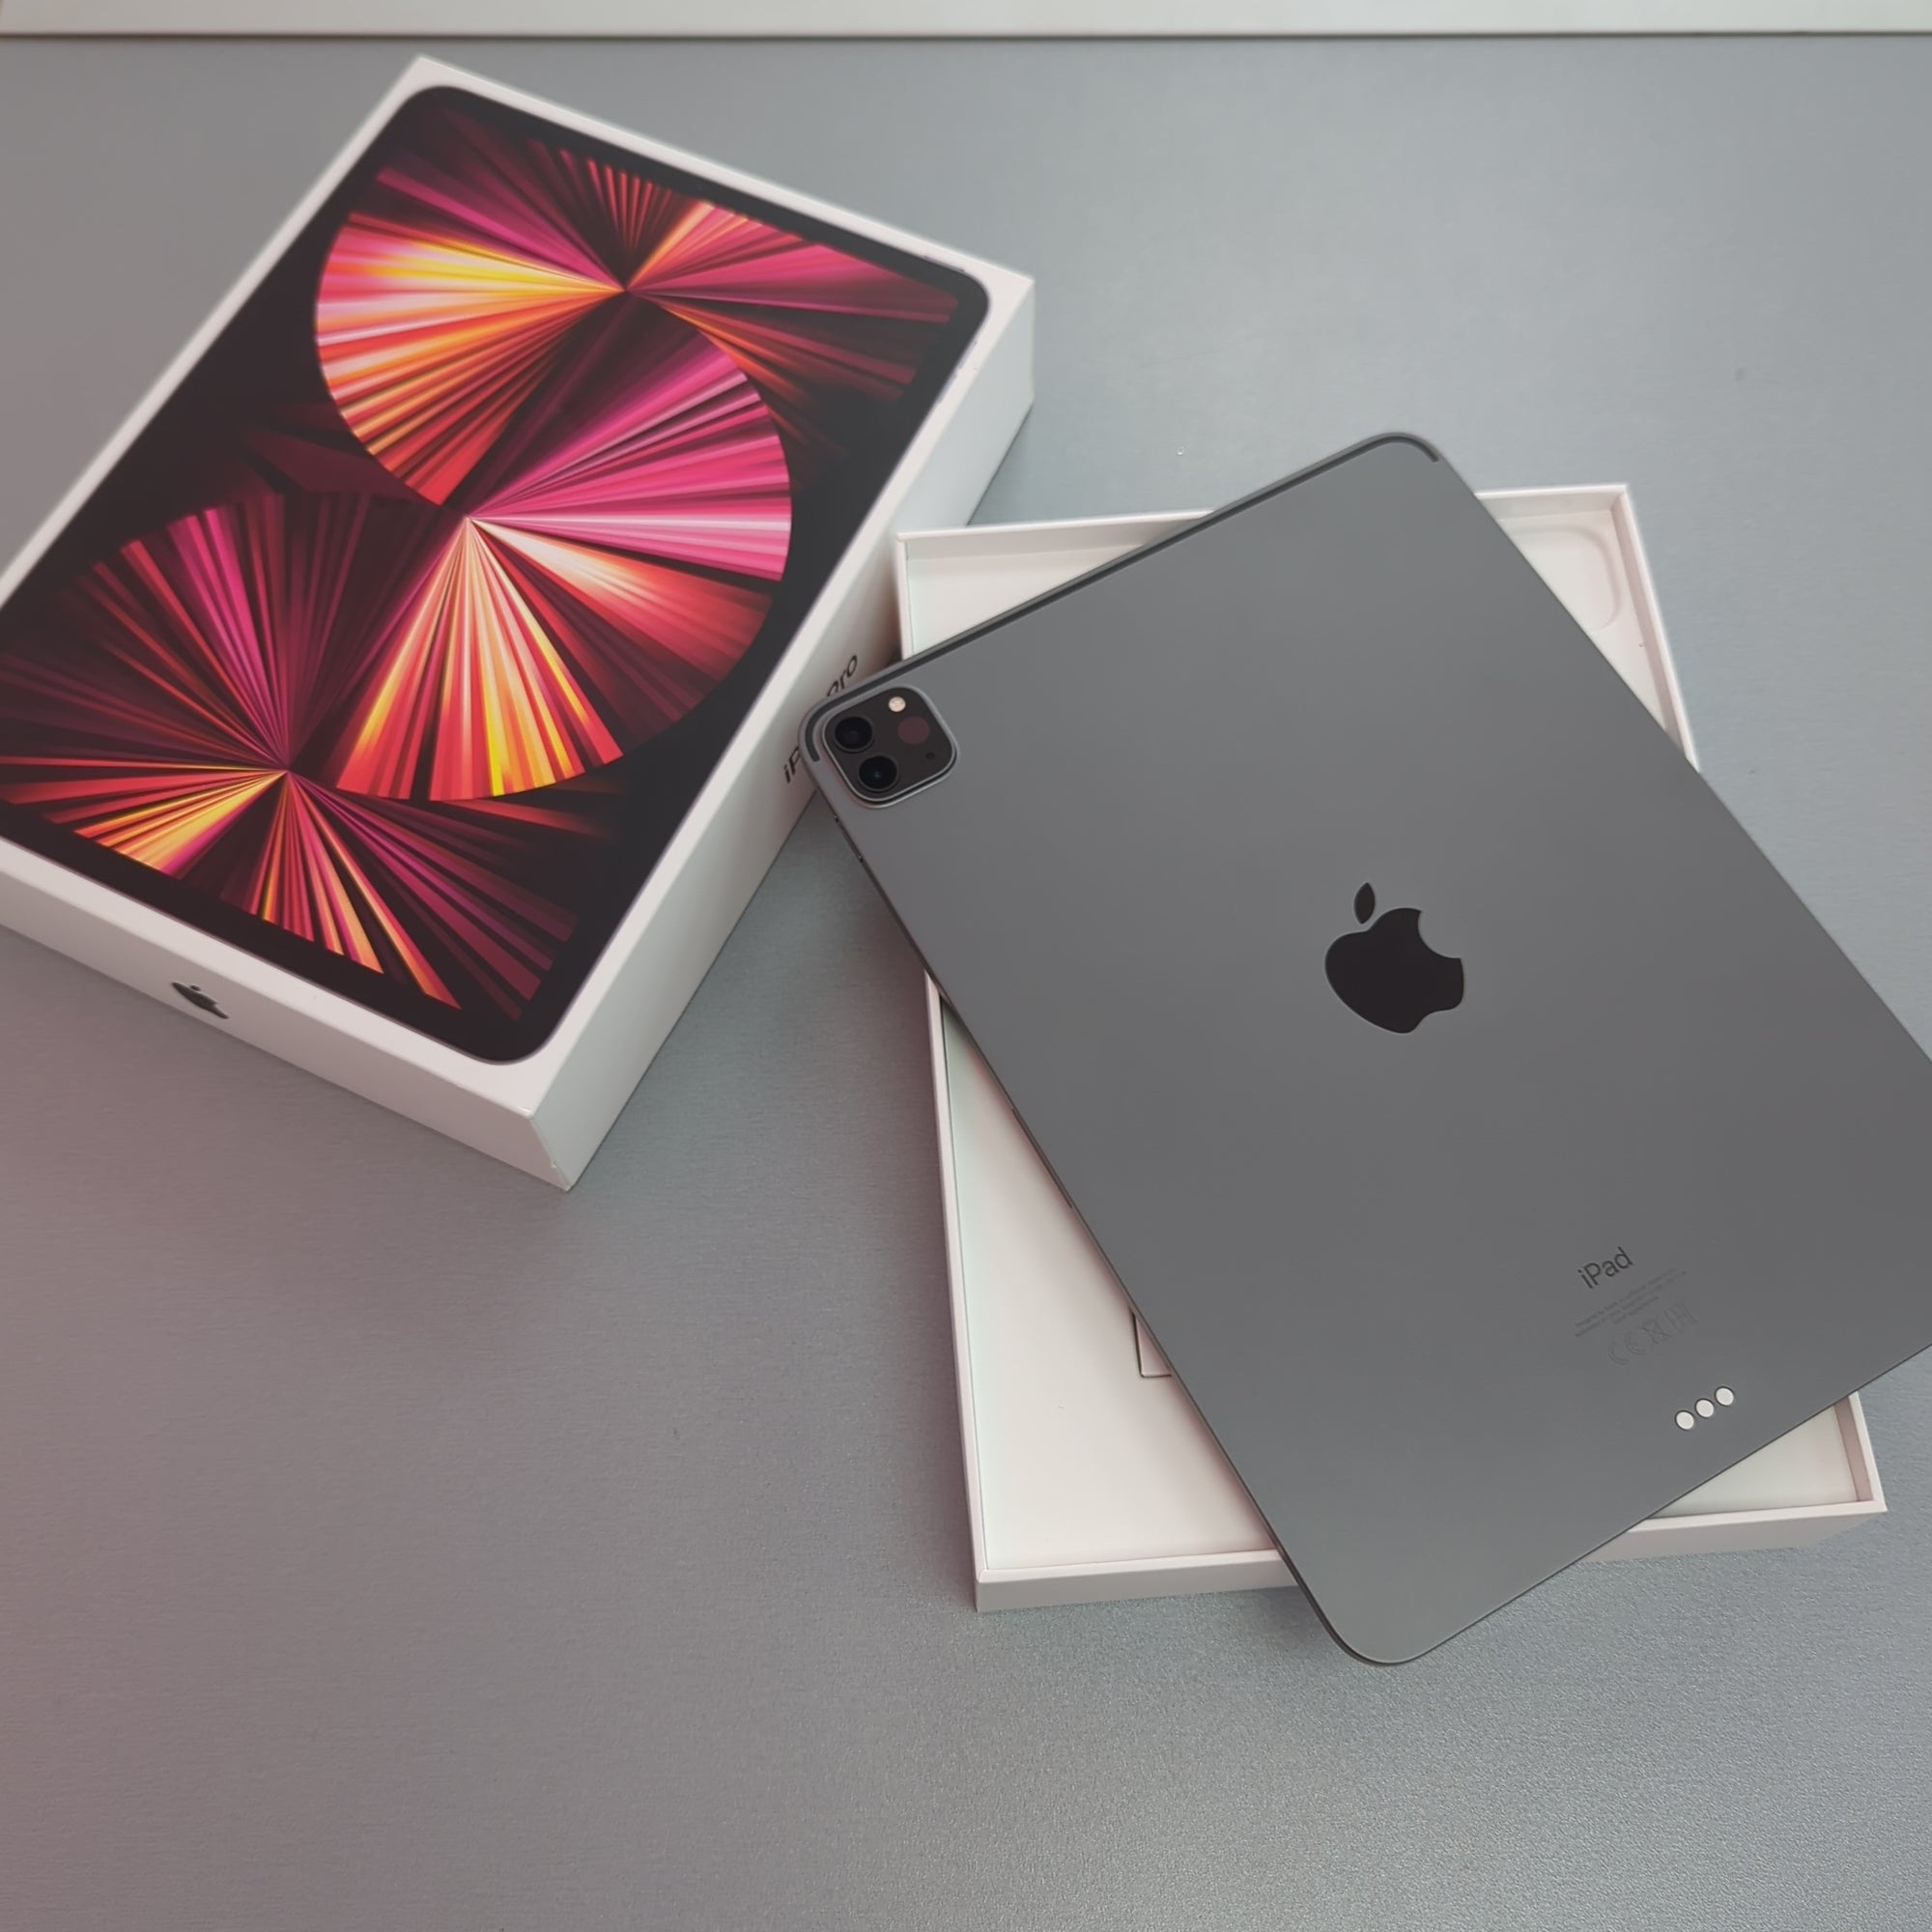 apple iPad Pro 11 inch (3rd Generation) 128GB Space Grey Wi-Fi